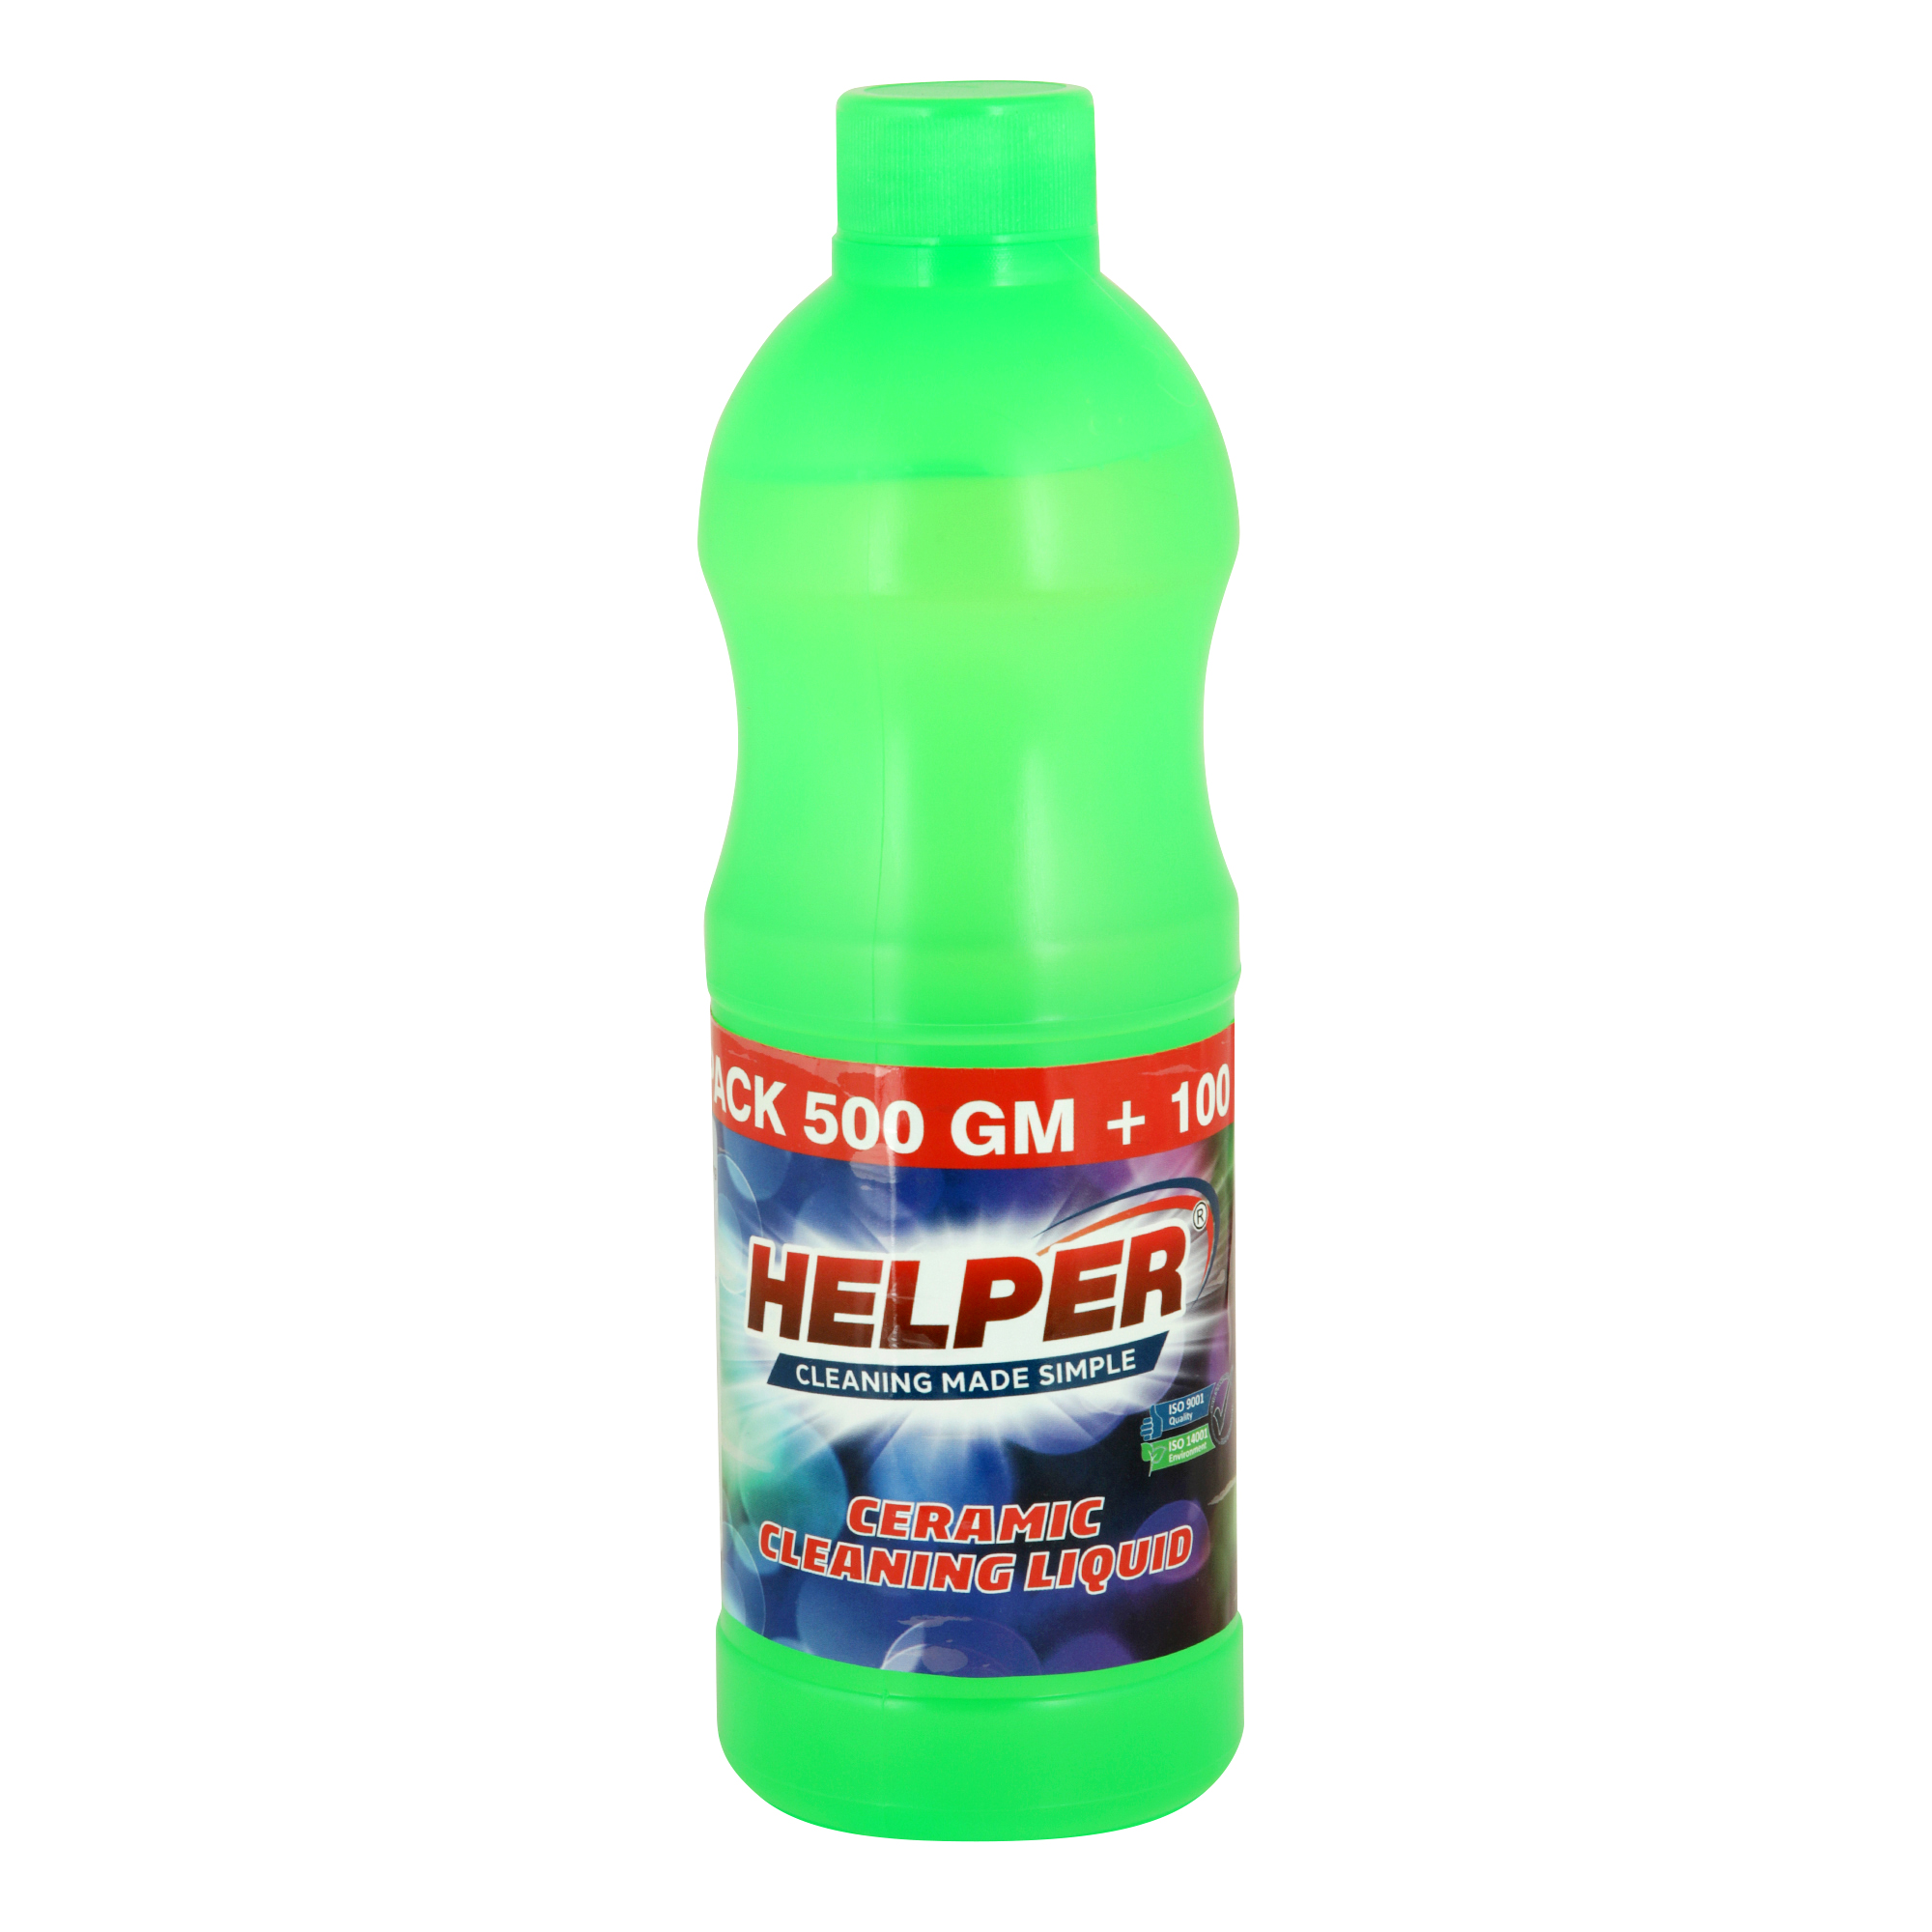 Helper Ceramic Cleaning Liquid, 750ml Bottle